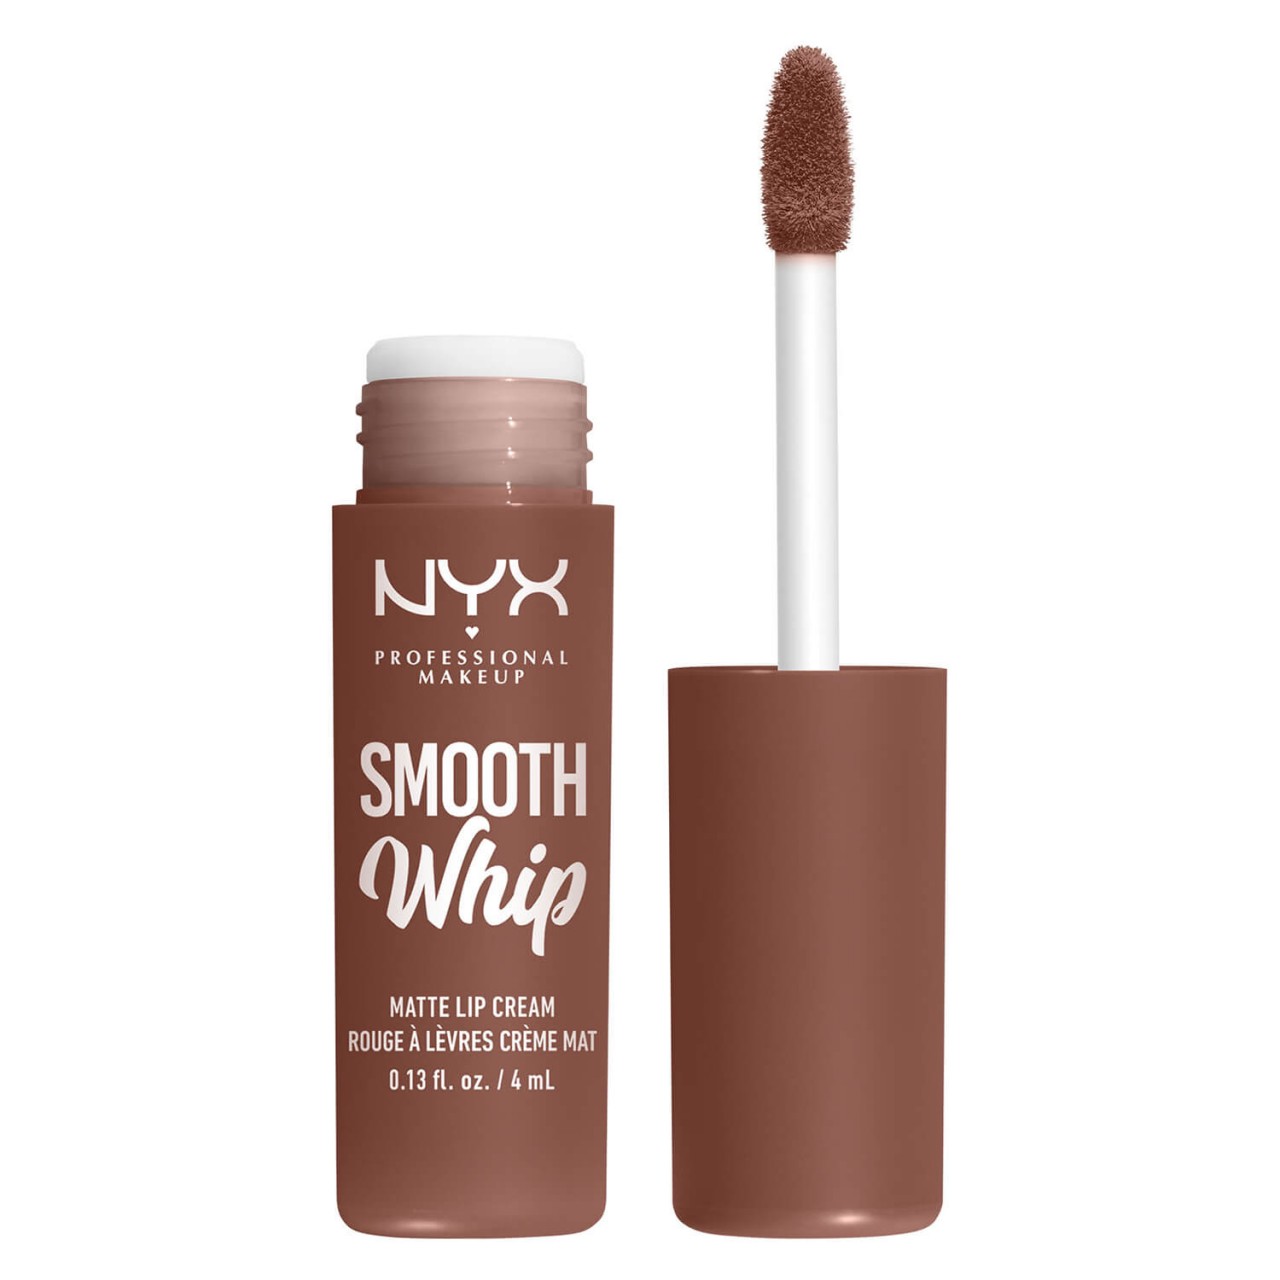 Smooth Whip Matte Lip Cream - Memory Foam von NYX Professional Makeup